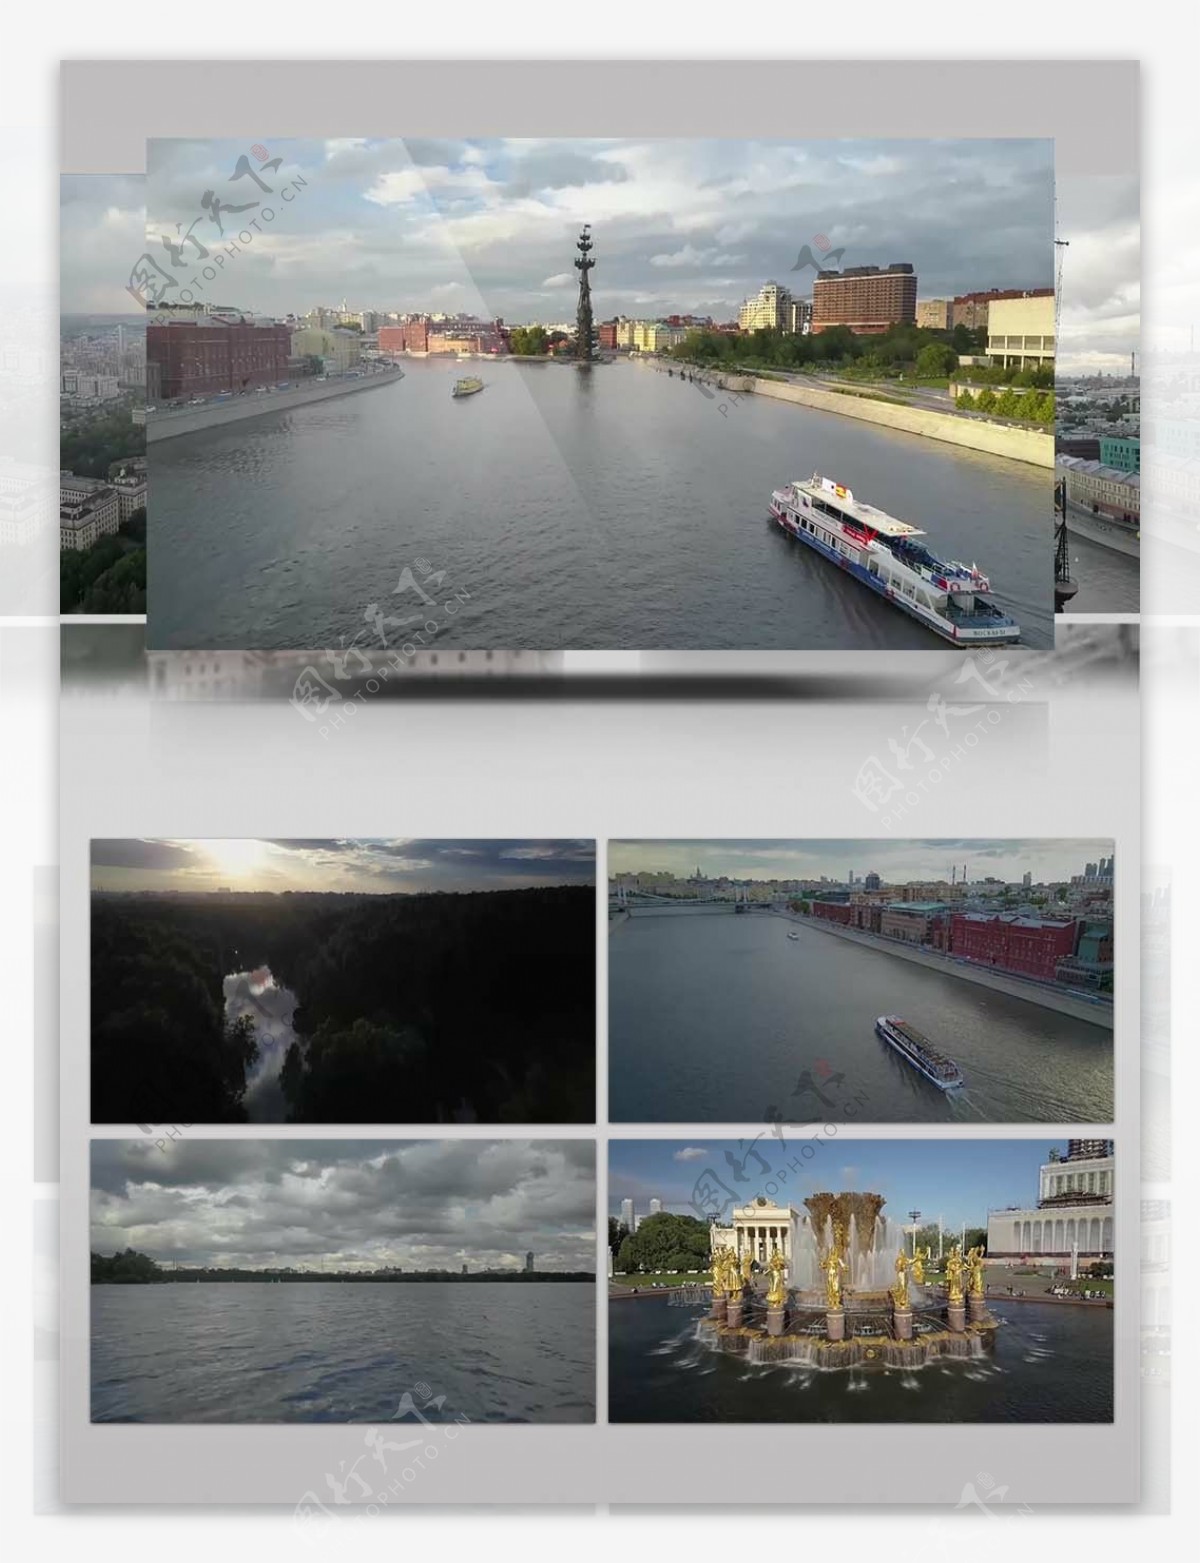 4K超清航拍莫斯科城市景观视频素材